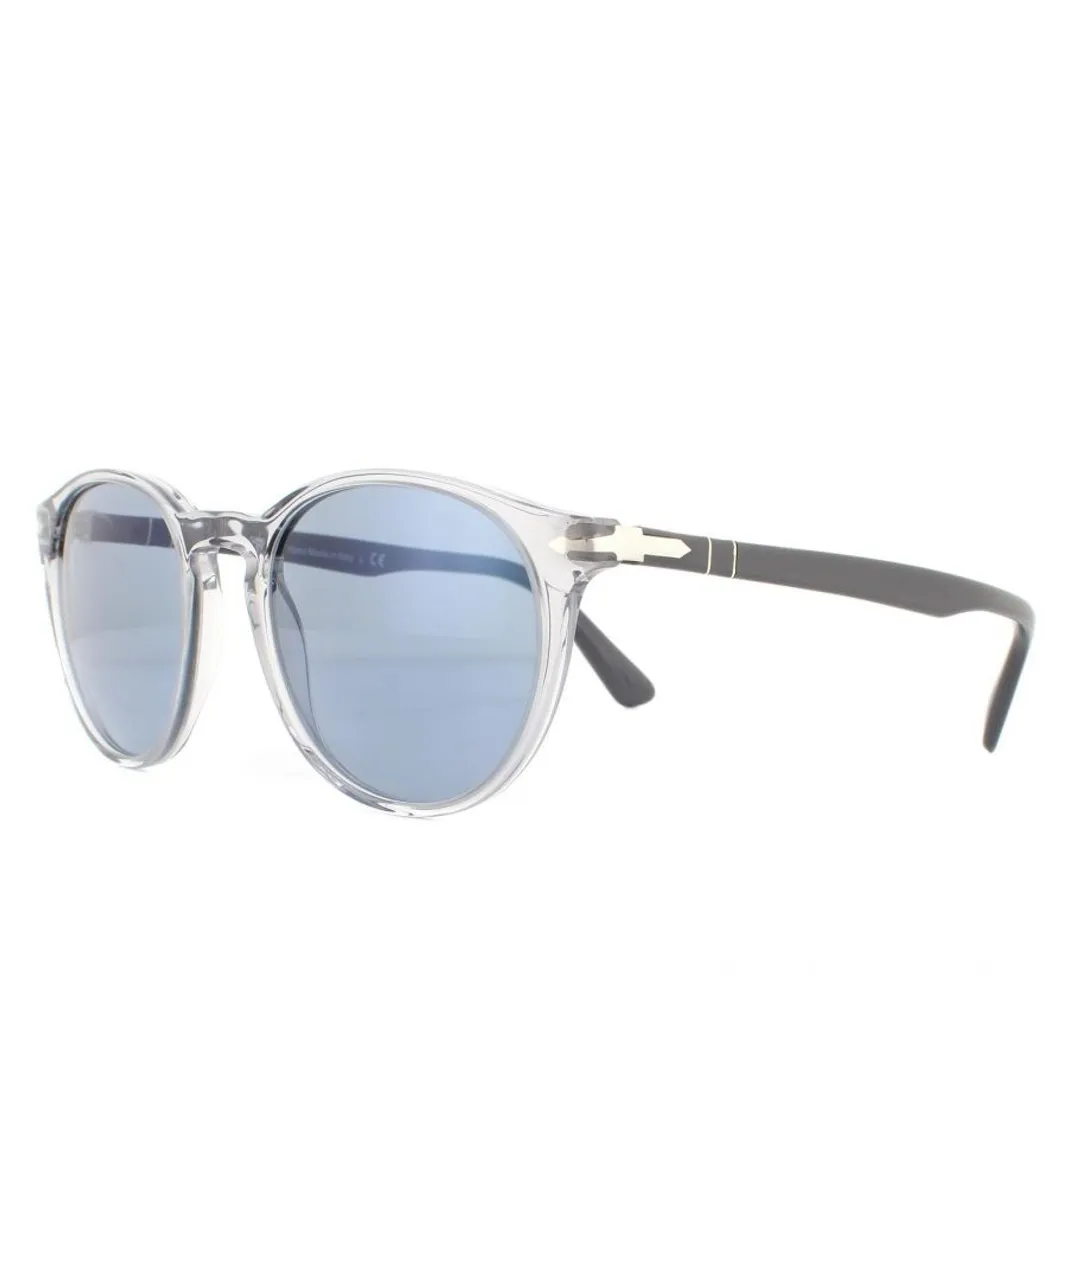 Persol Mens Sunglasses PO3152S 113356 Smoke Light Blue - Grey - One